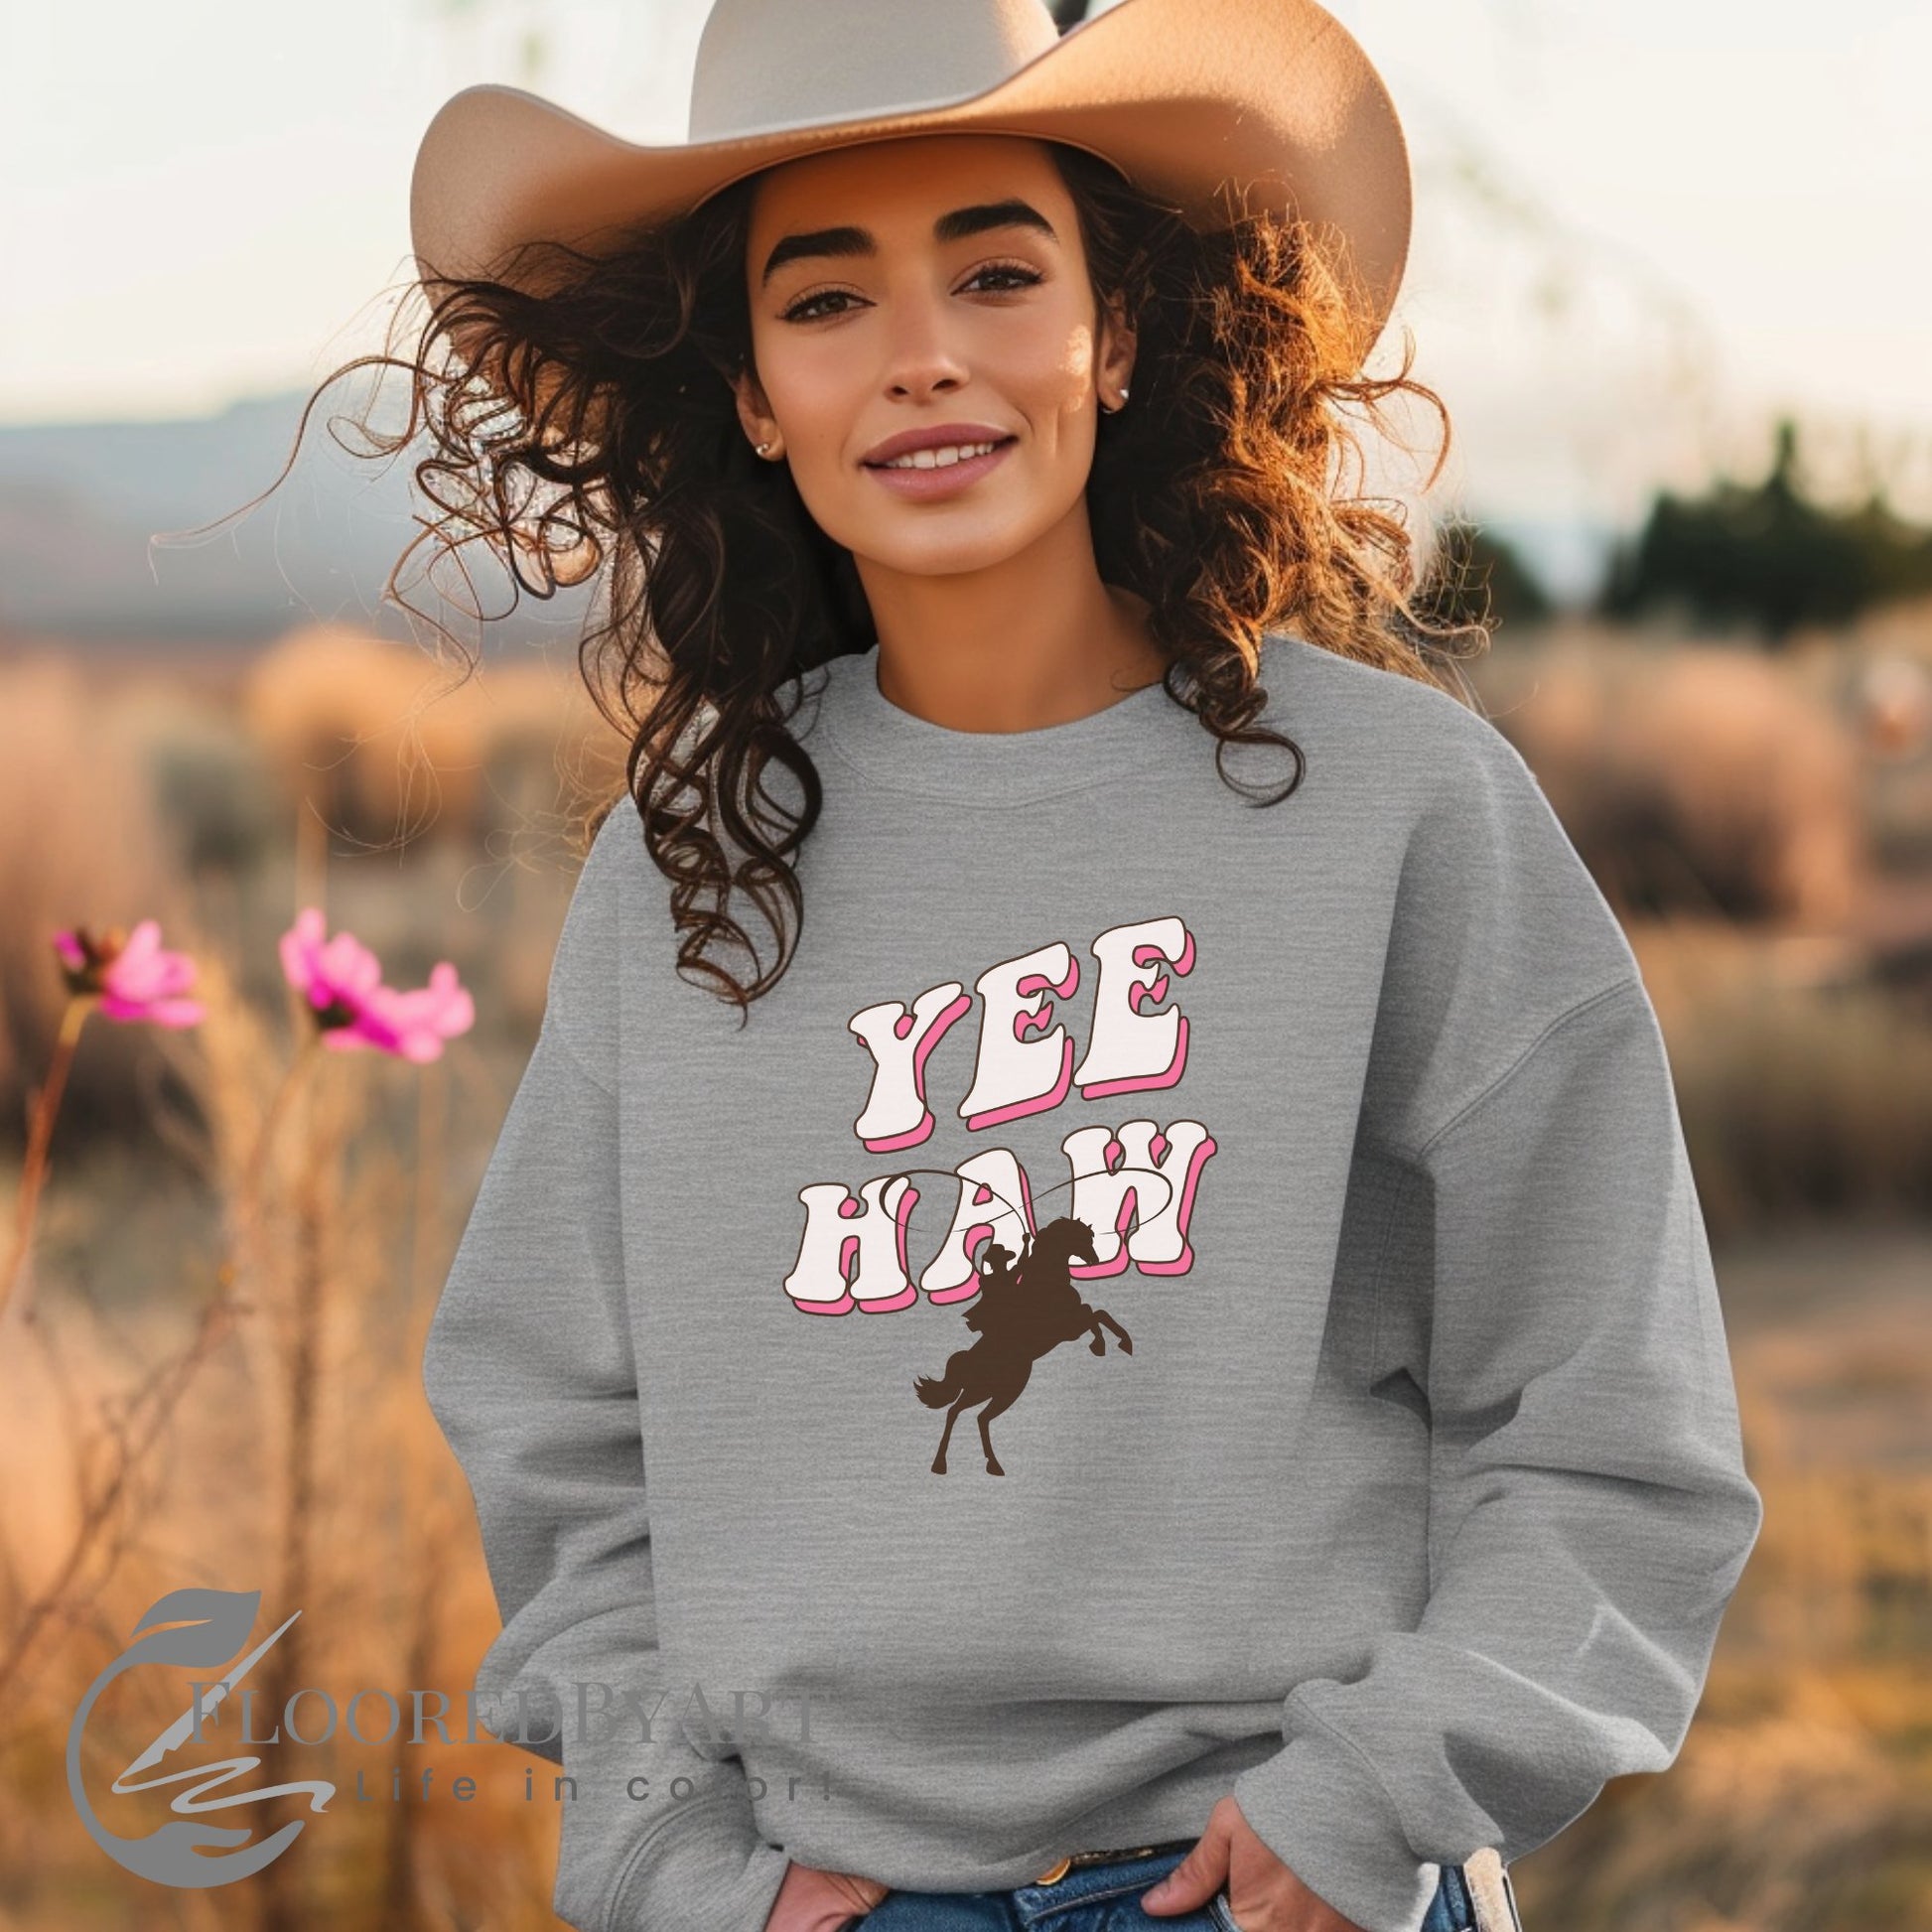 Retro Rodeo Sweatshirt, Western Graphic Cowgirl Sweater - FlooredByArt